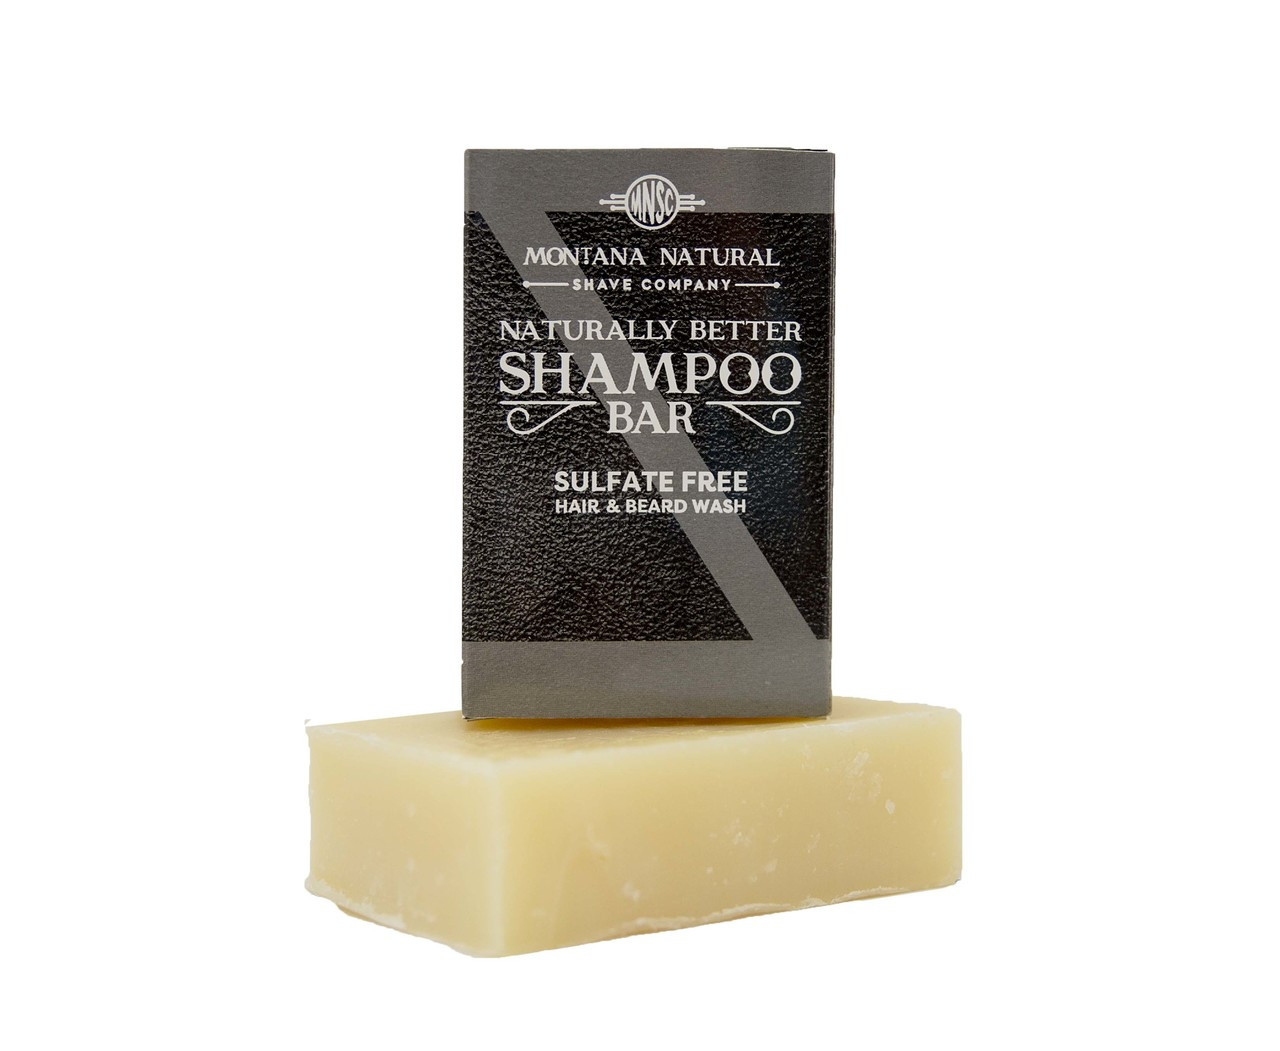 Mens Soap Bar - Bay Rum - Shower, Shave, Shampoo (4.5 oz)